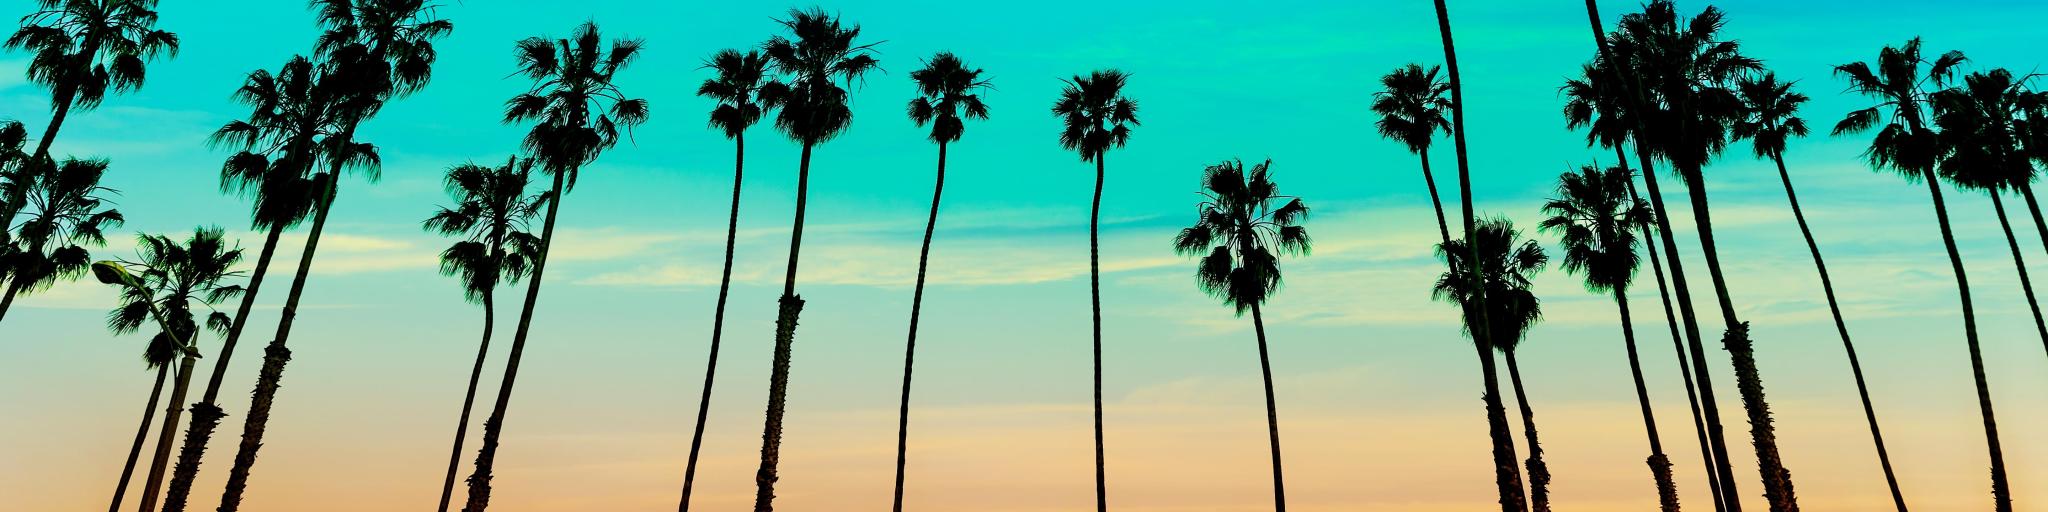 California sunset Palm tree rows in Santa Barbara, US.